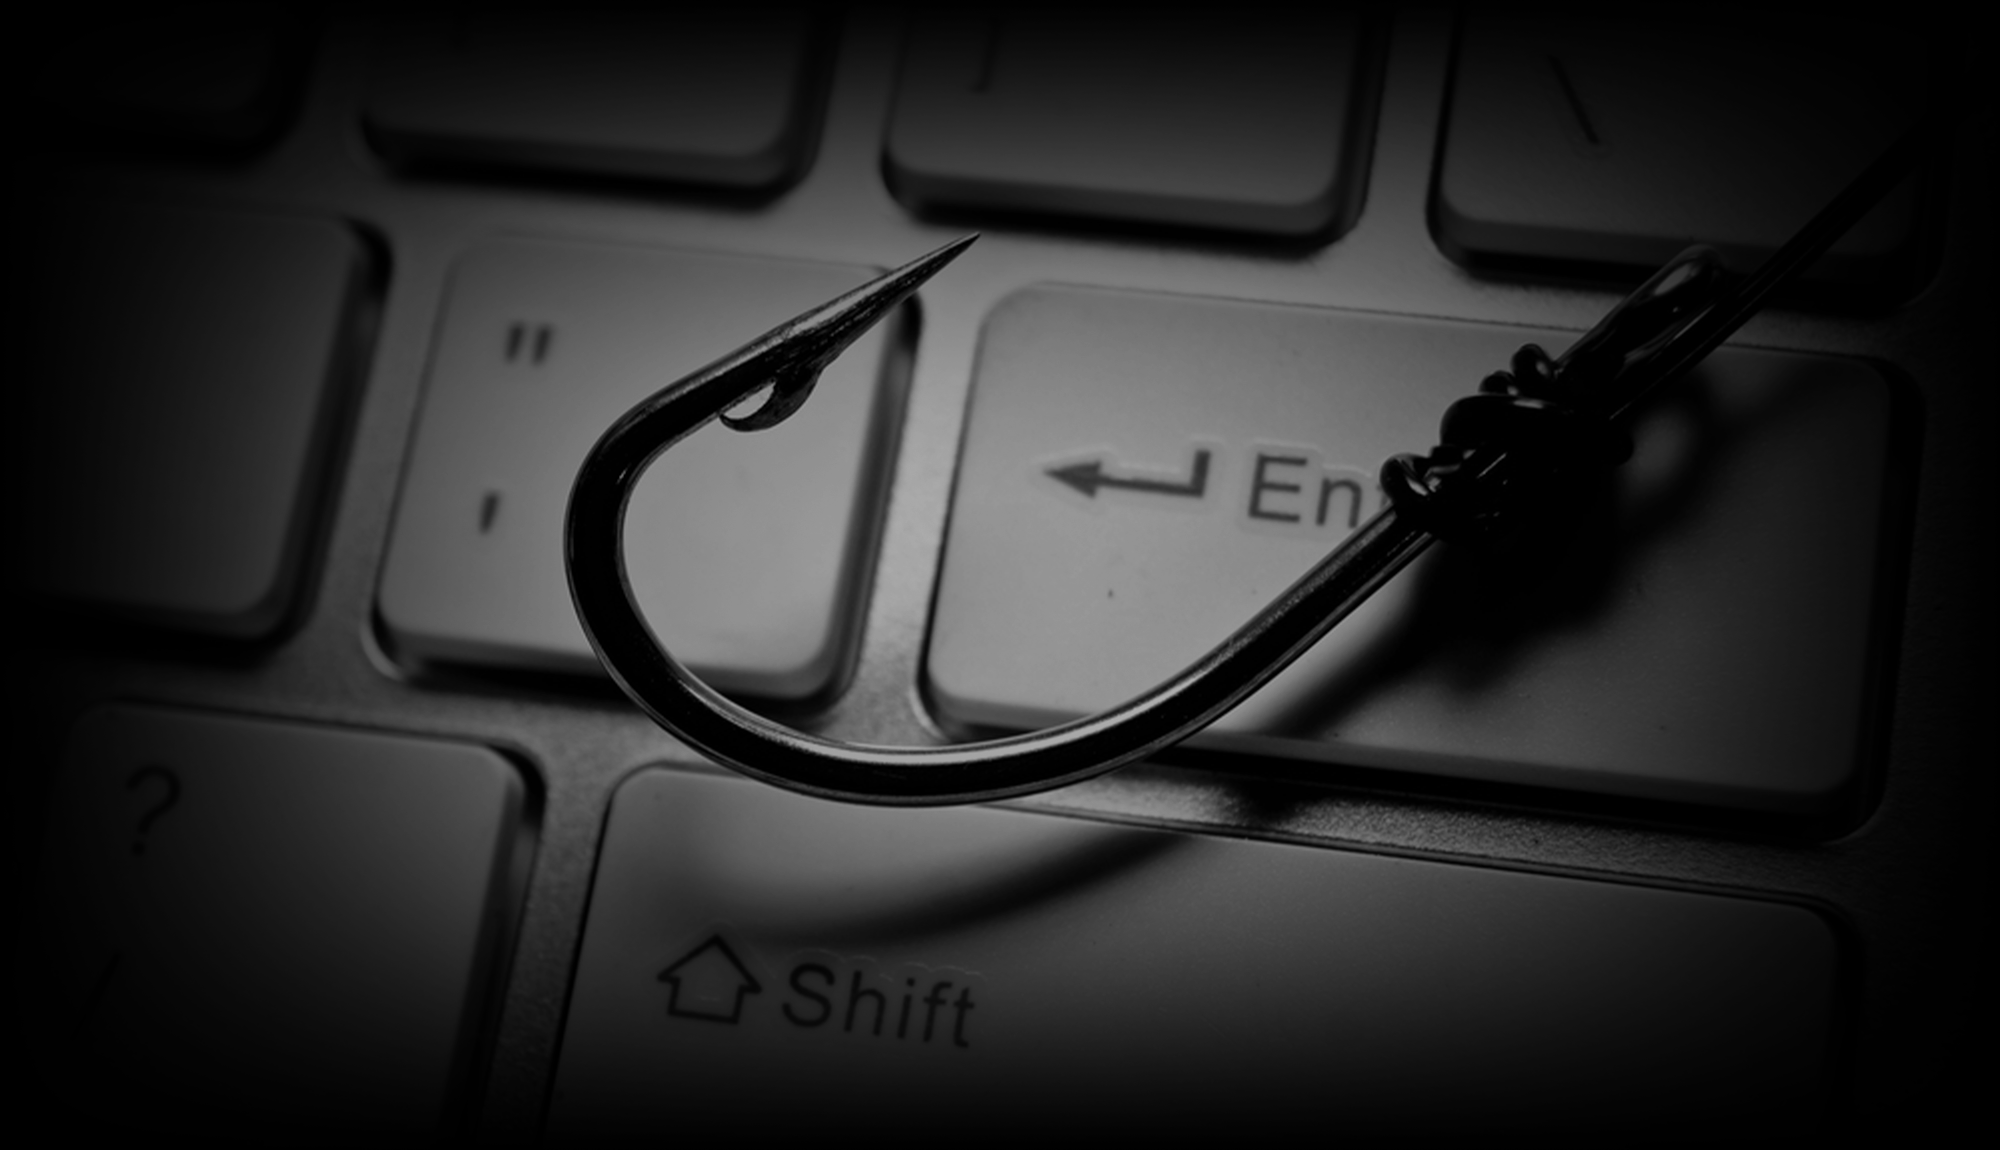 LogoKit update – The phishing kit leveraging Open Redirect Vulnerabilities